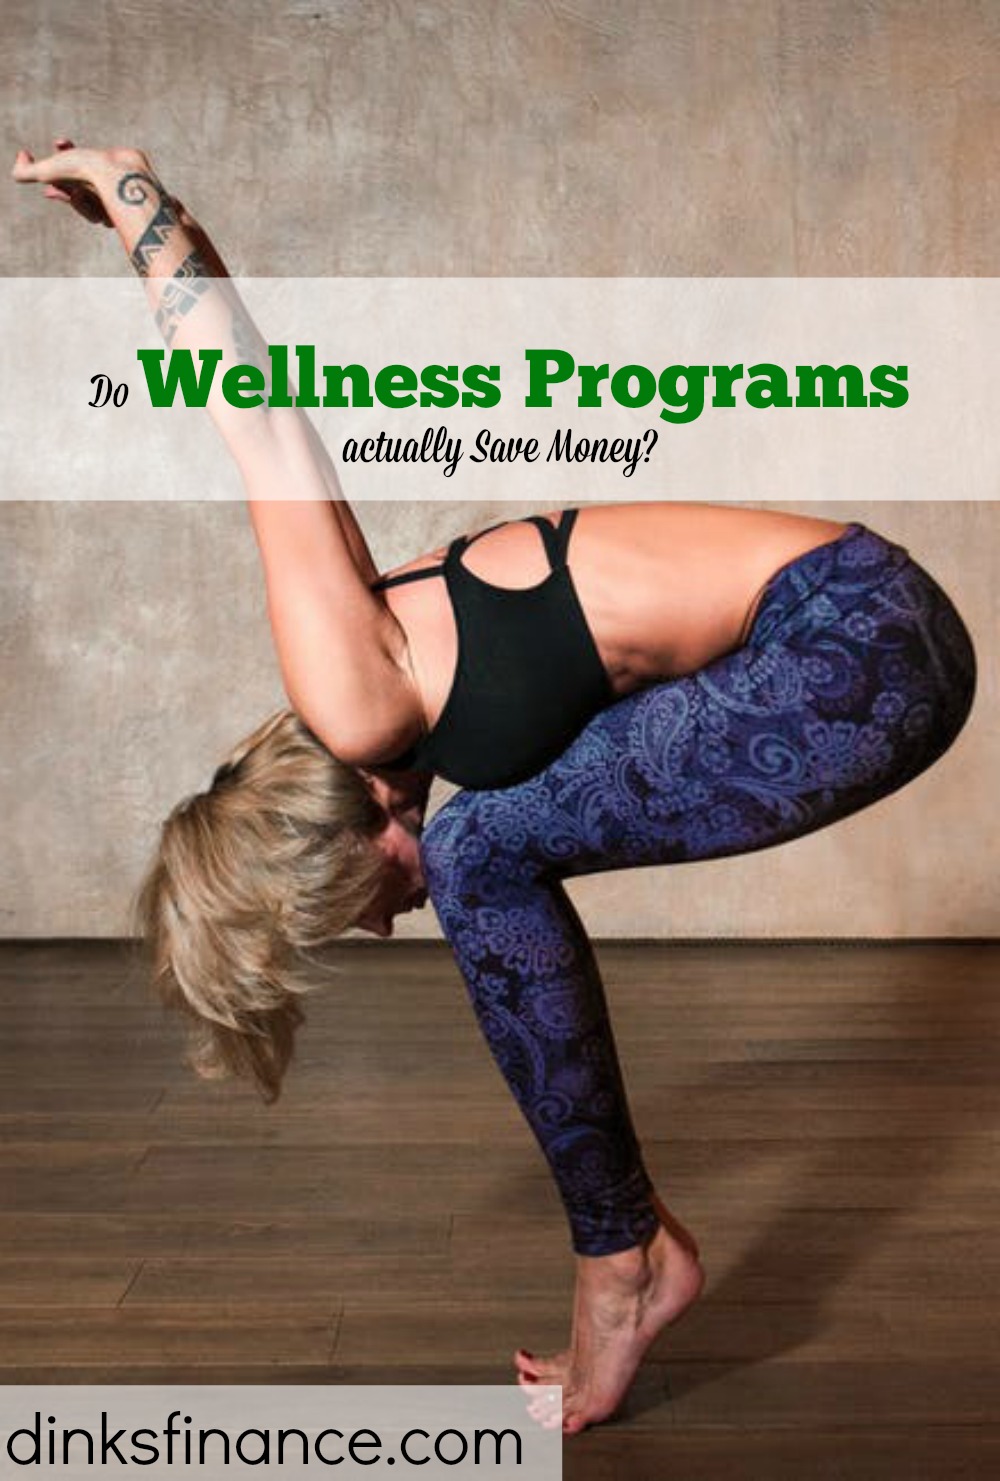 company wellness programs, getting healthy, saving money through wellness programs